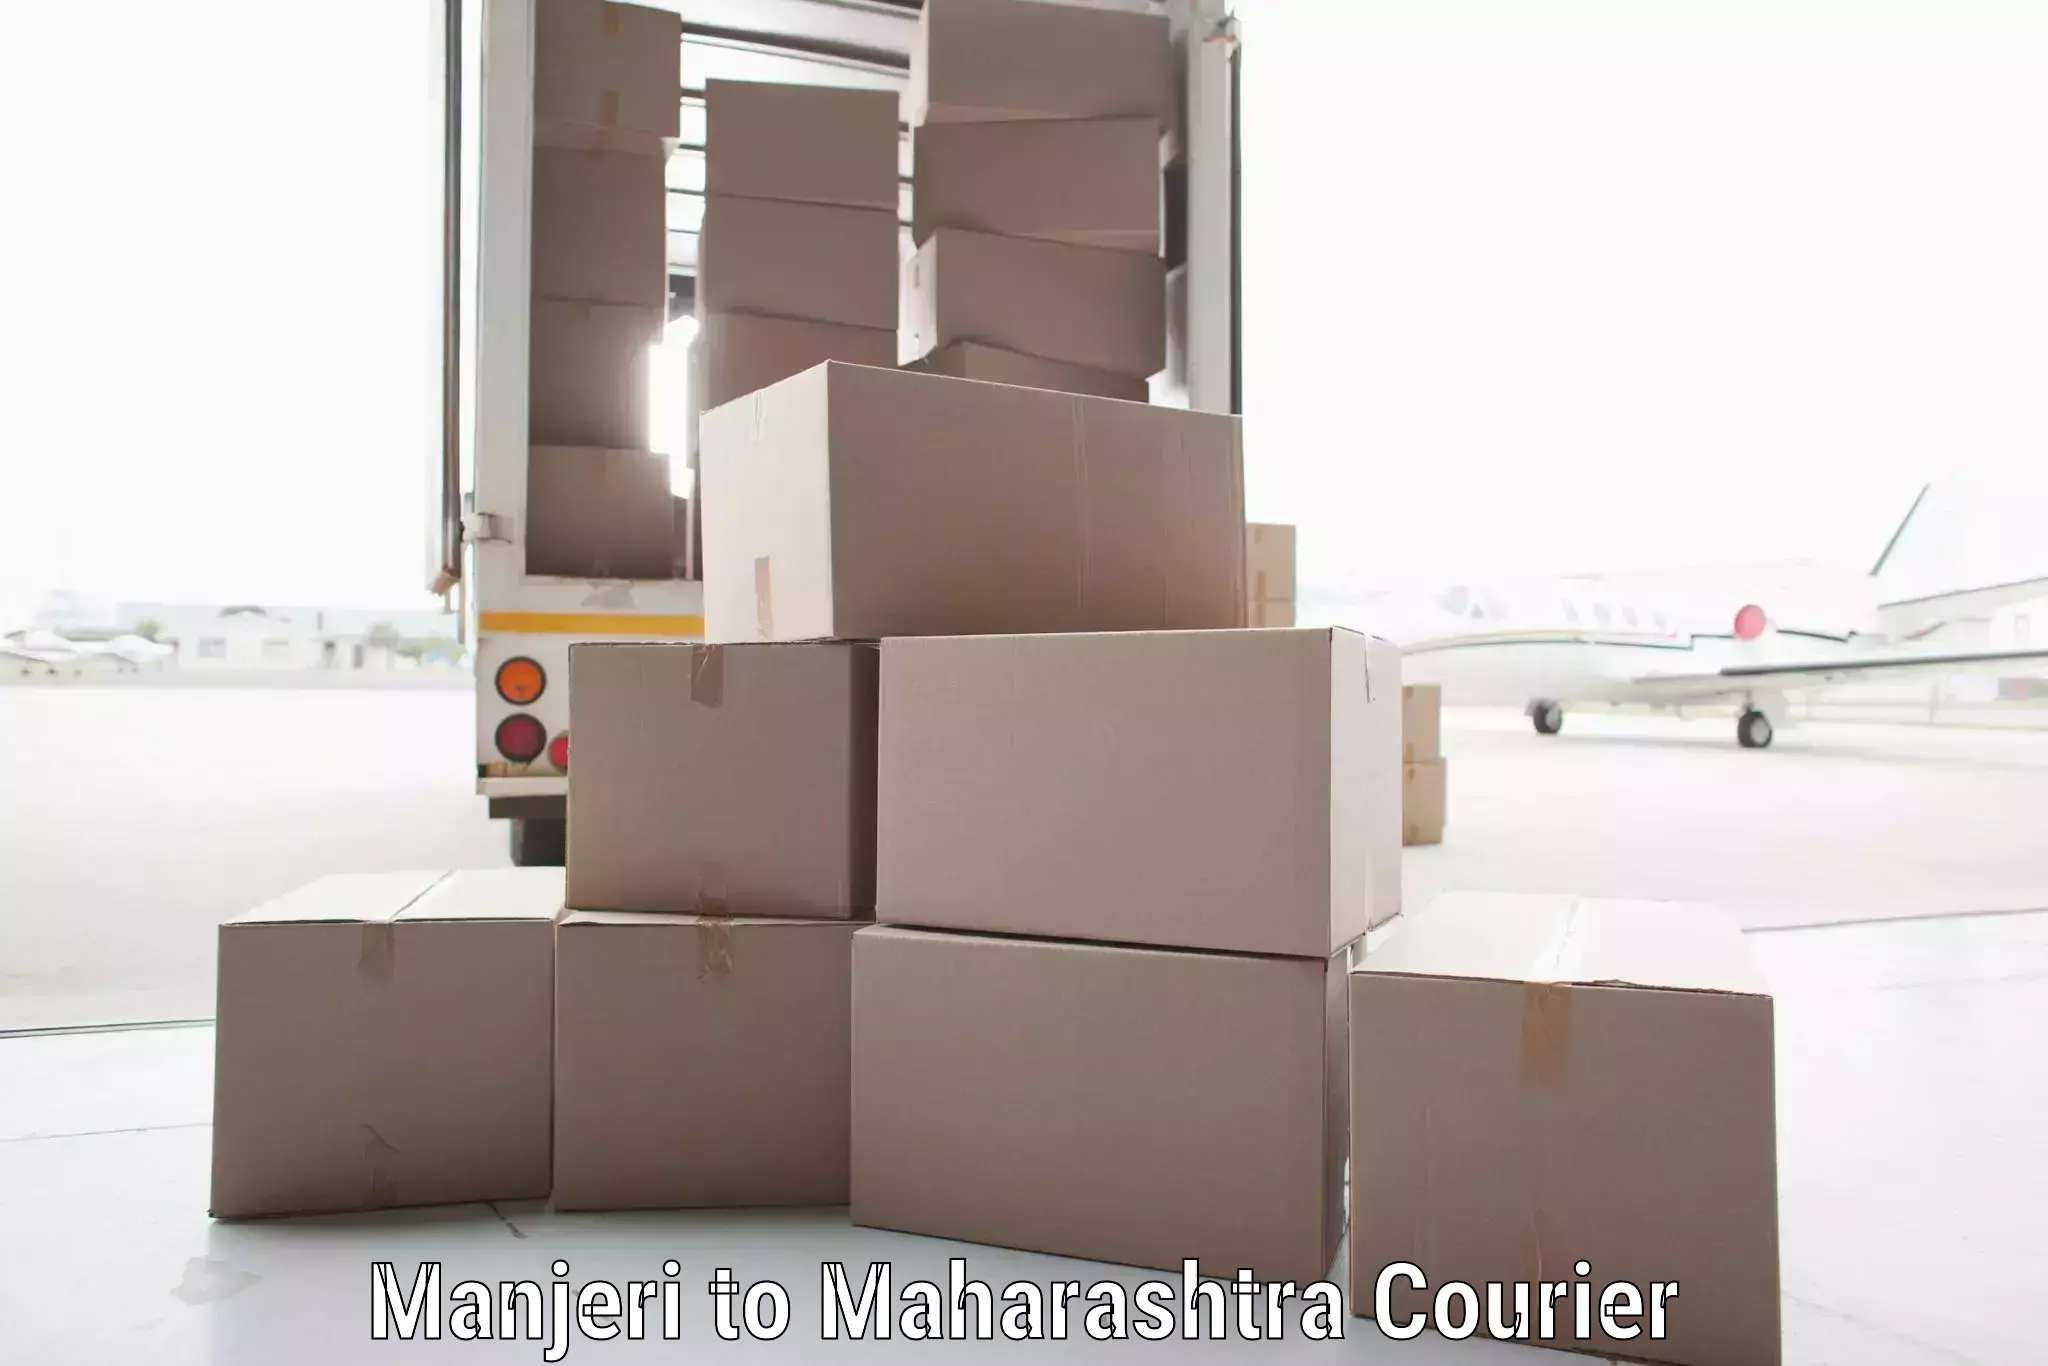 Courier service comparison Manjeri to Maharashtra